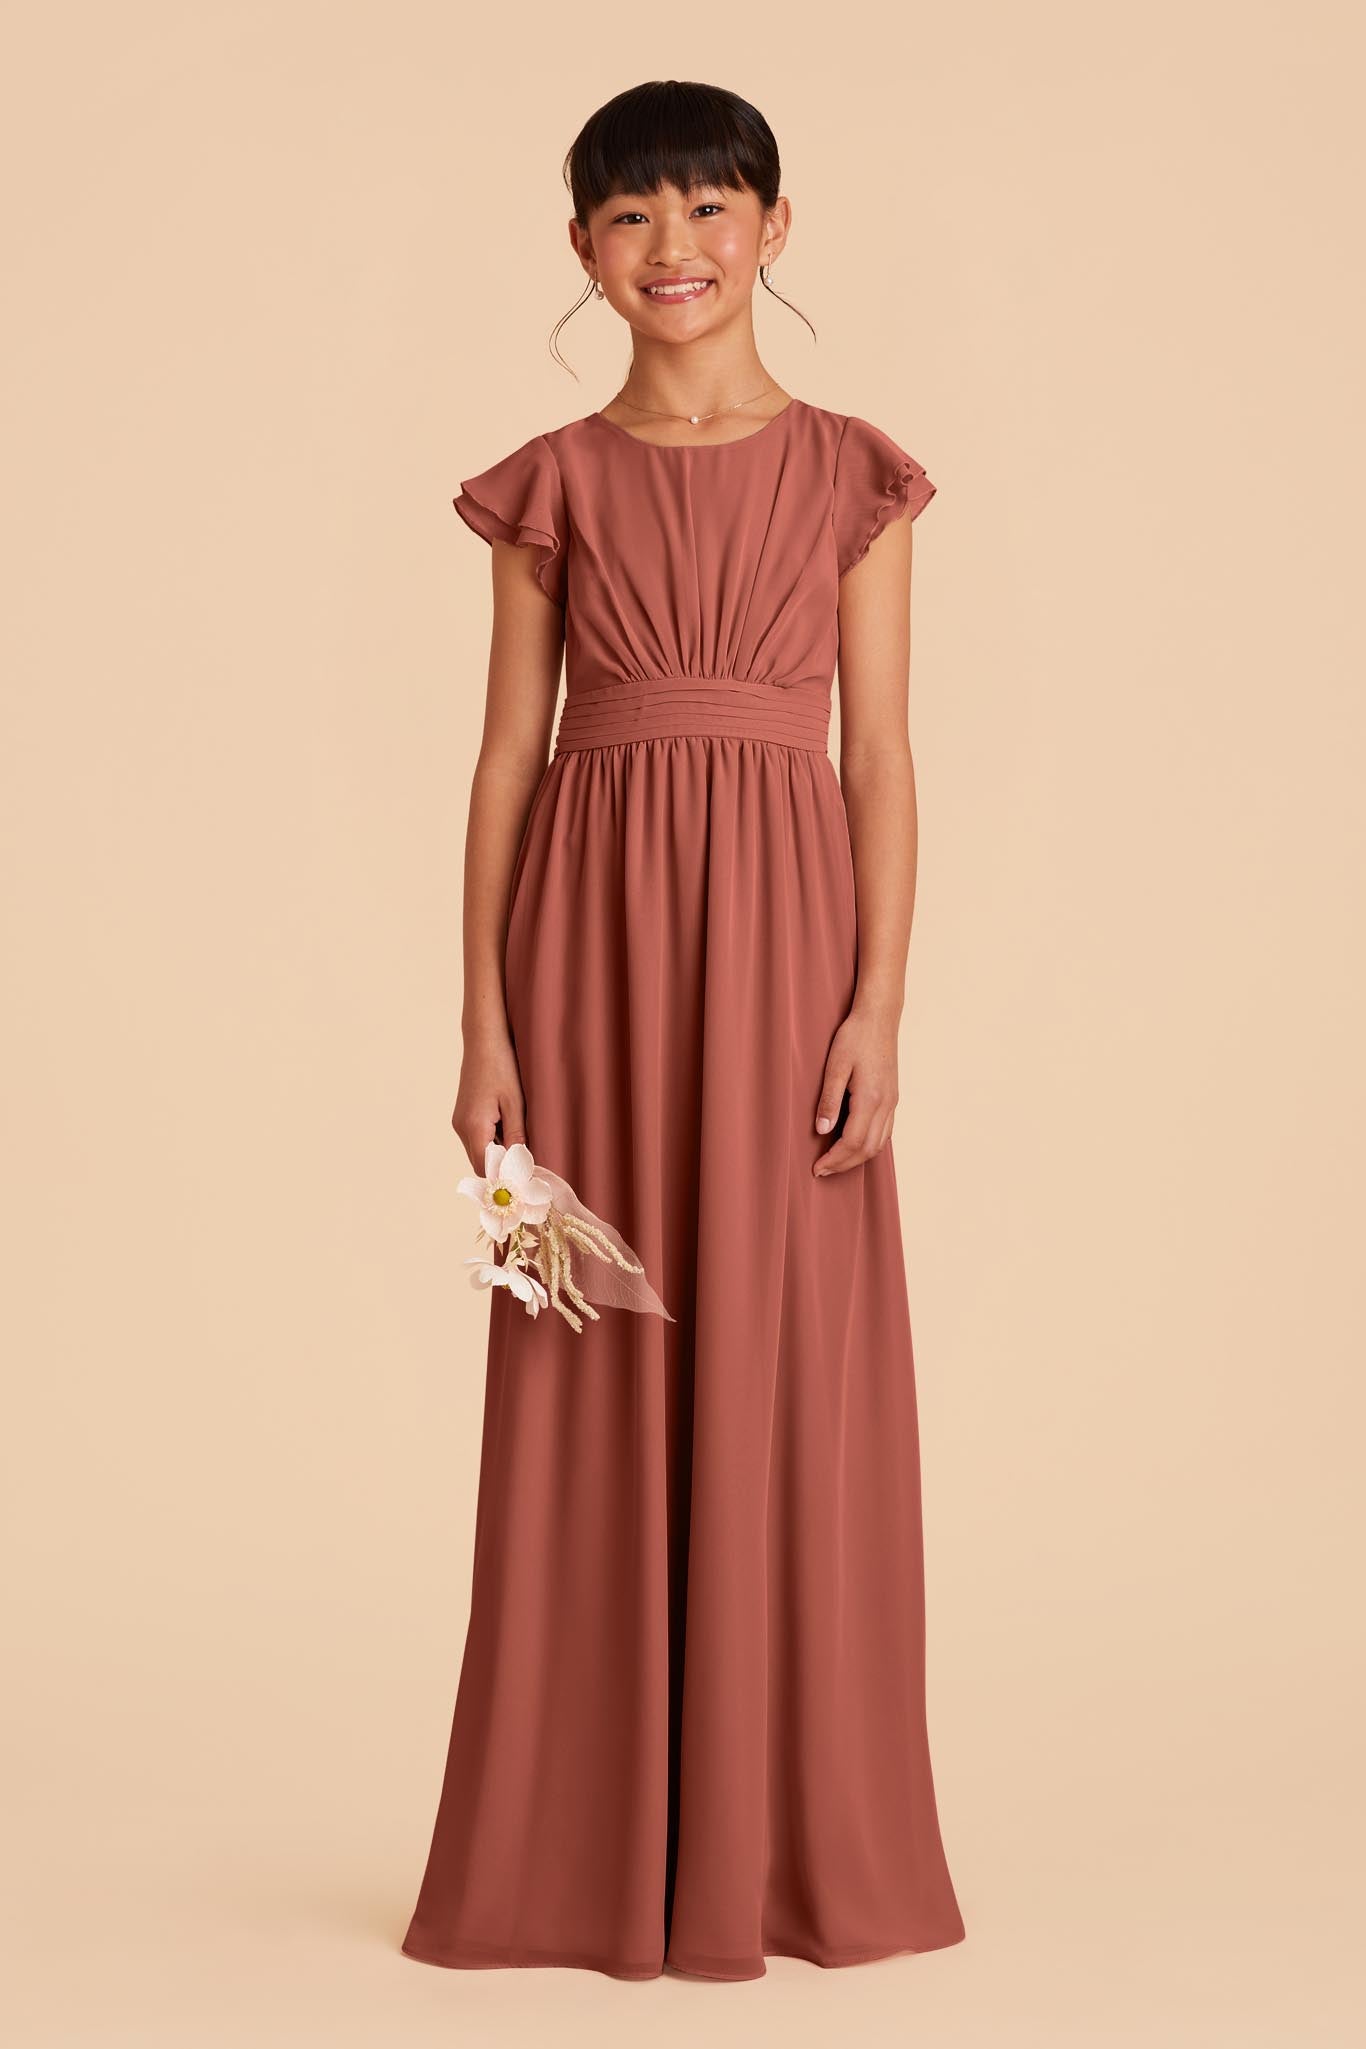 Desert Rose Celine Junior Dress by Birdy Grey